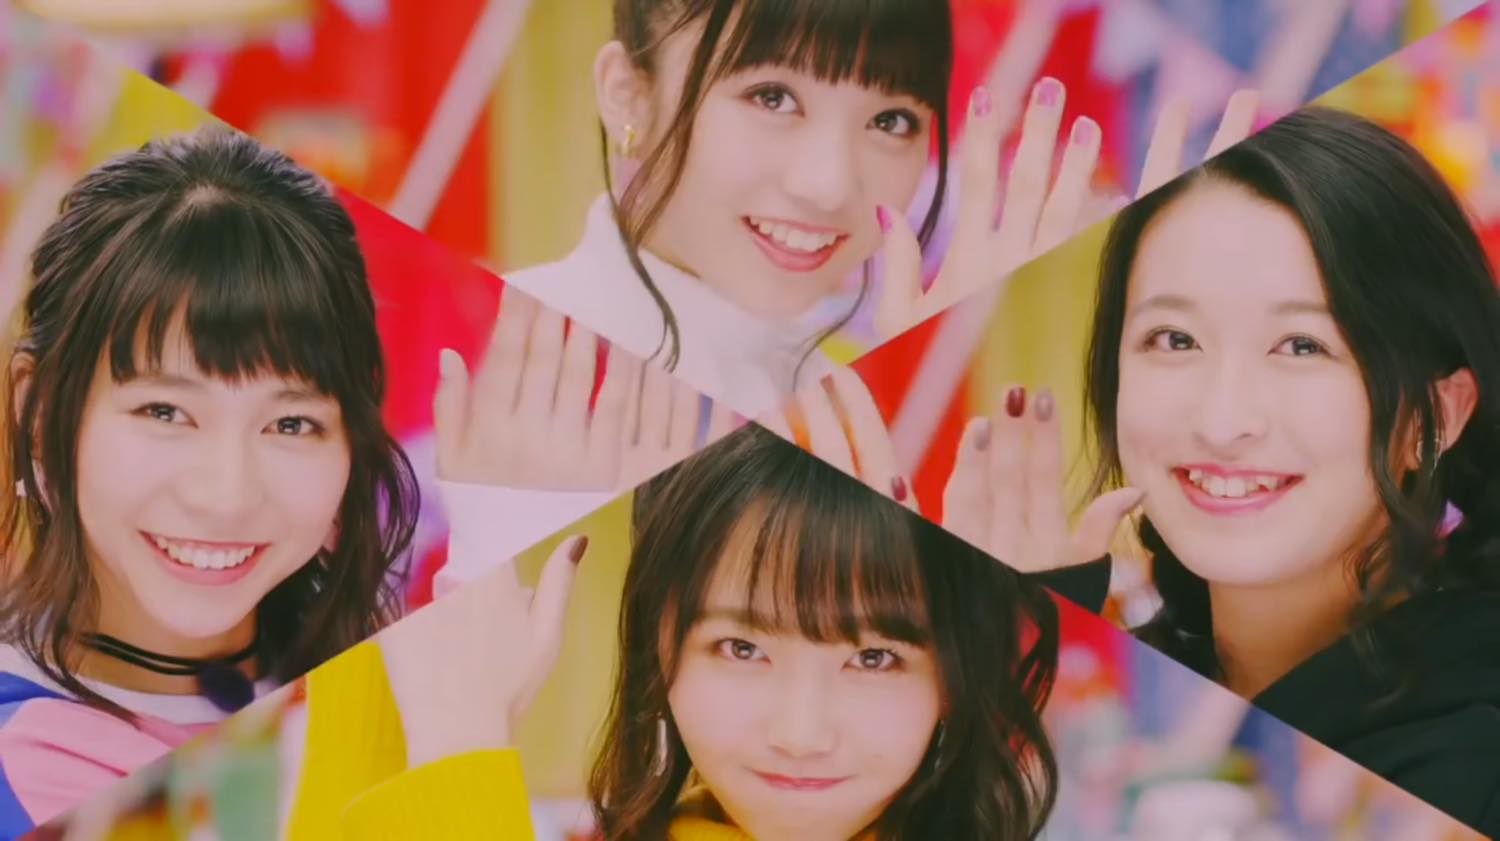 Oven Fresh Kawaii! TOKYO GIRLS’ STYLE Present Sweet MV for “Mille-feuille” (Version Cute)!